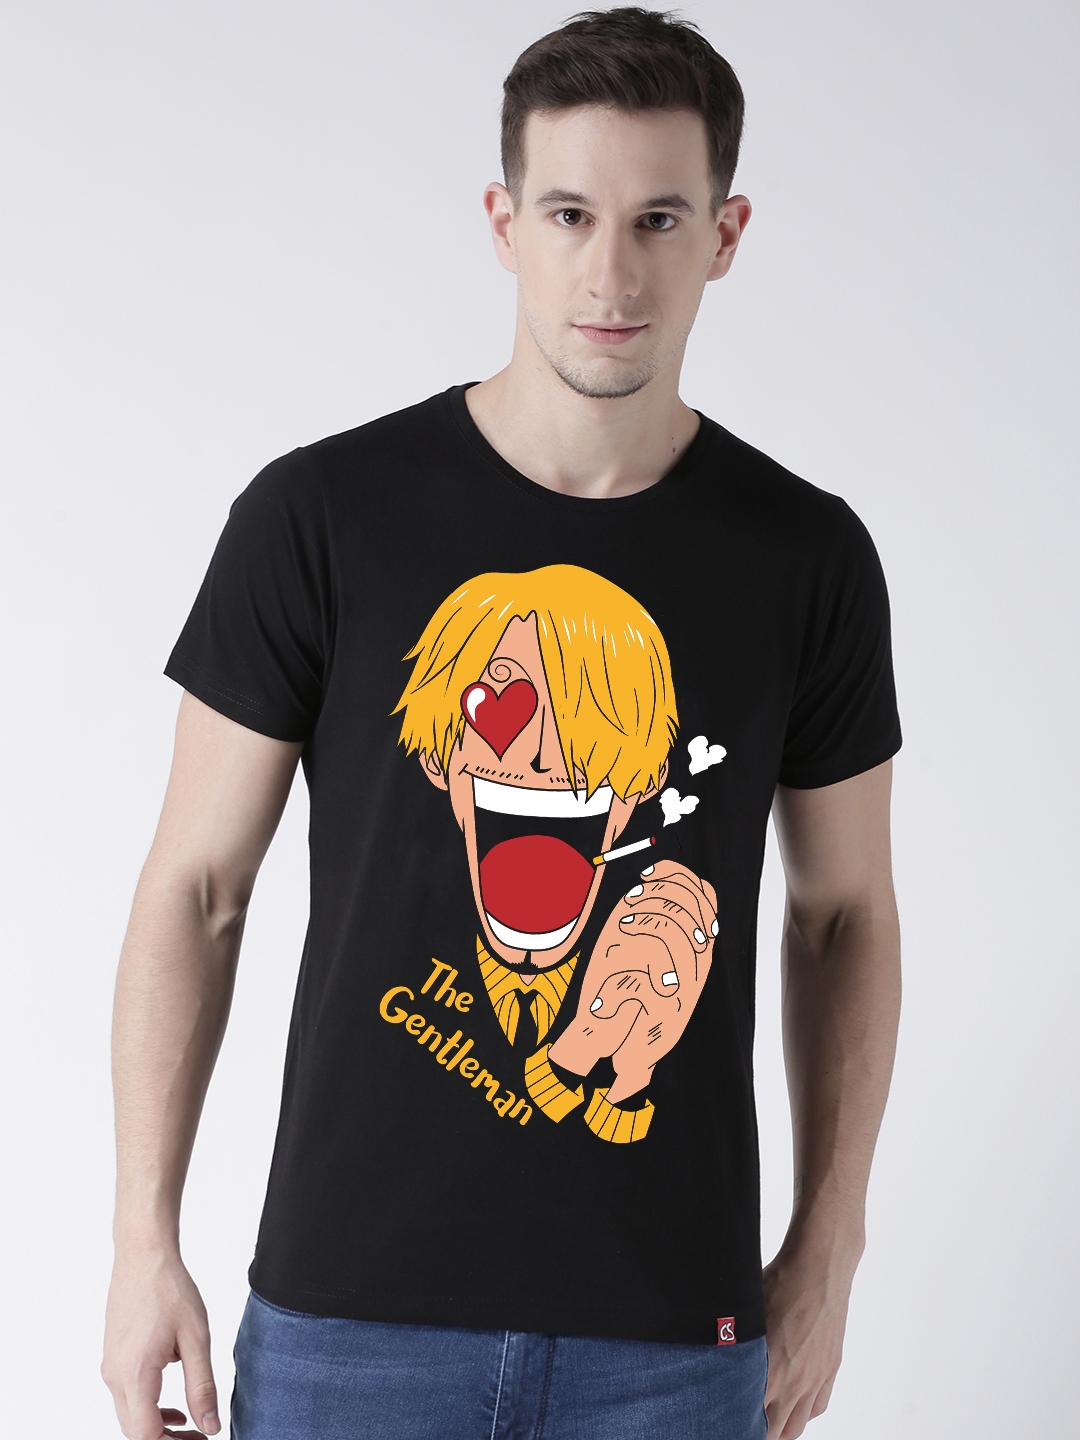 One Piece Shirt Naruto Seal Shirt The Straw Hat Shirt  Dashing Tee